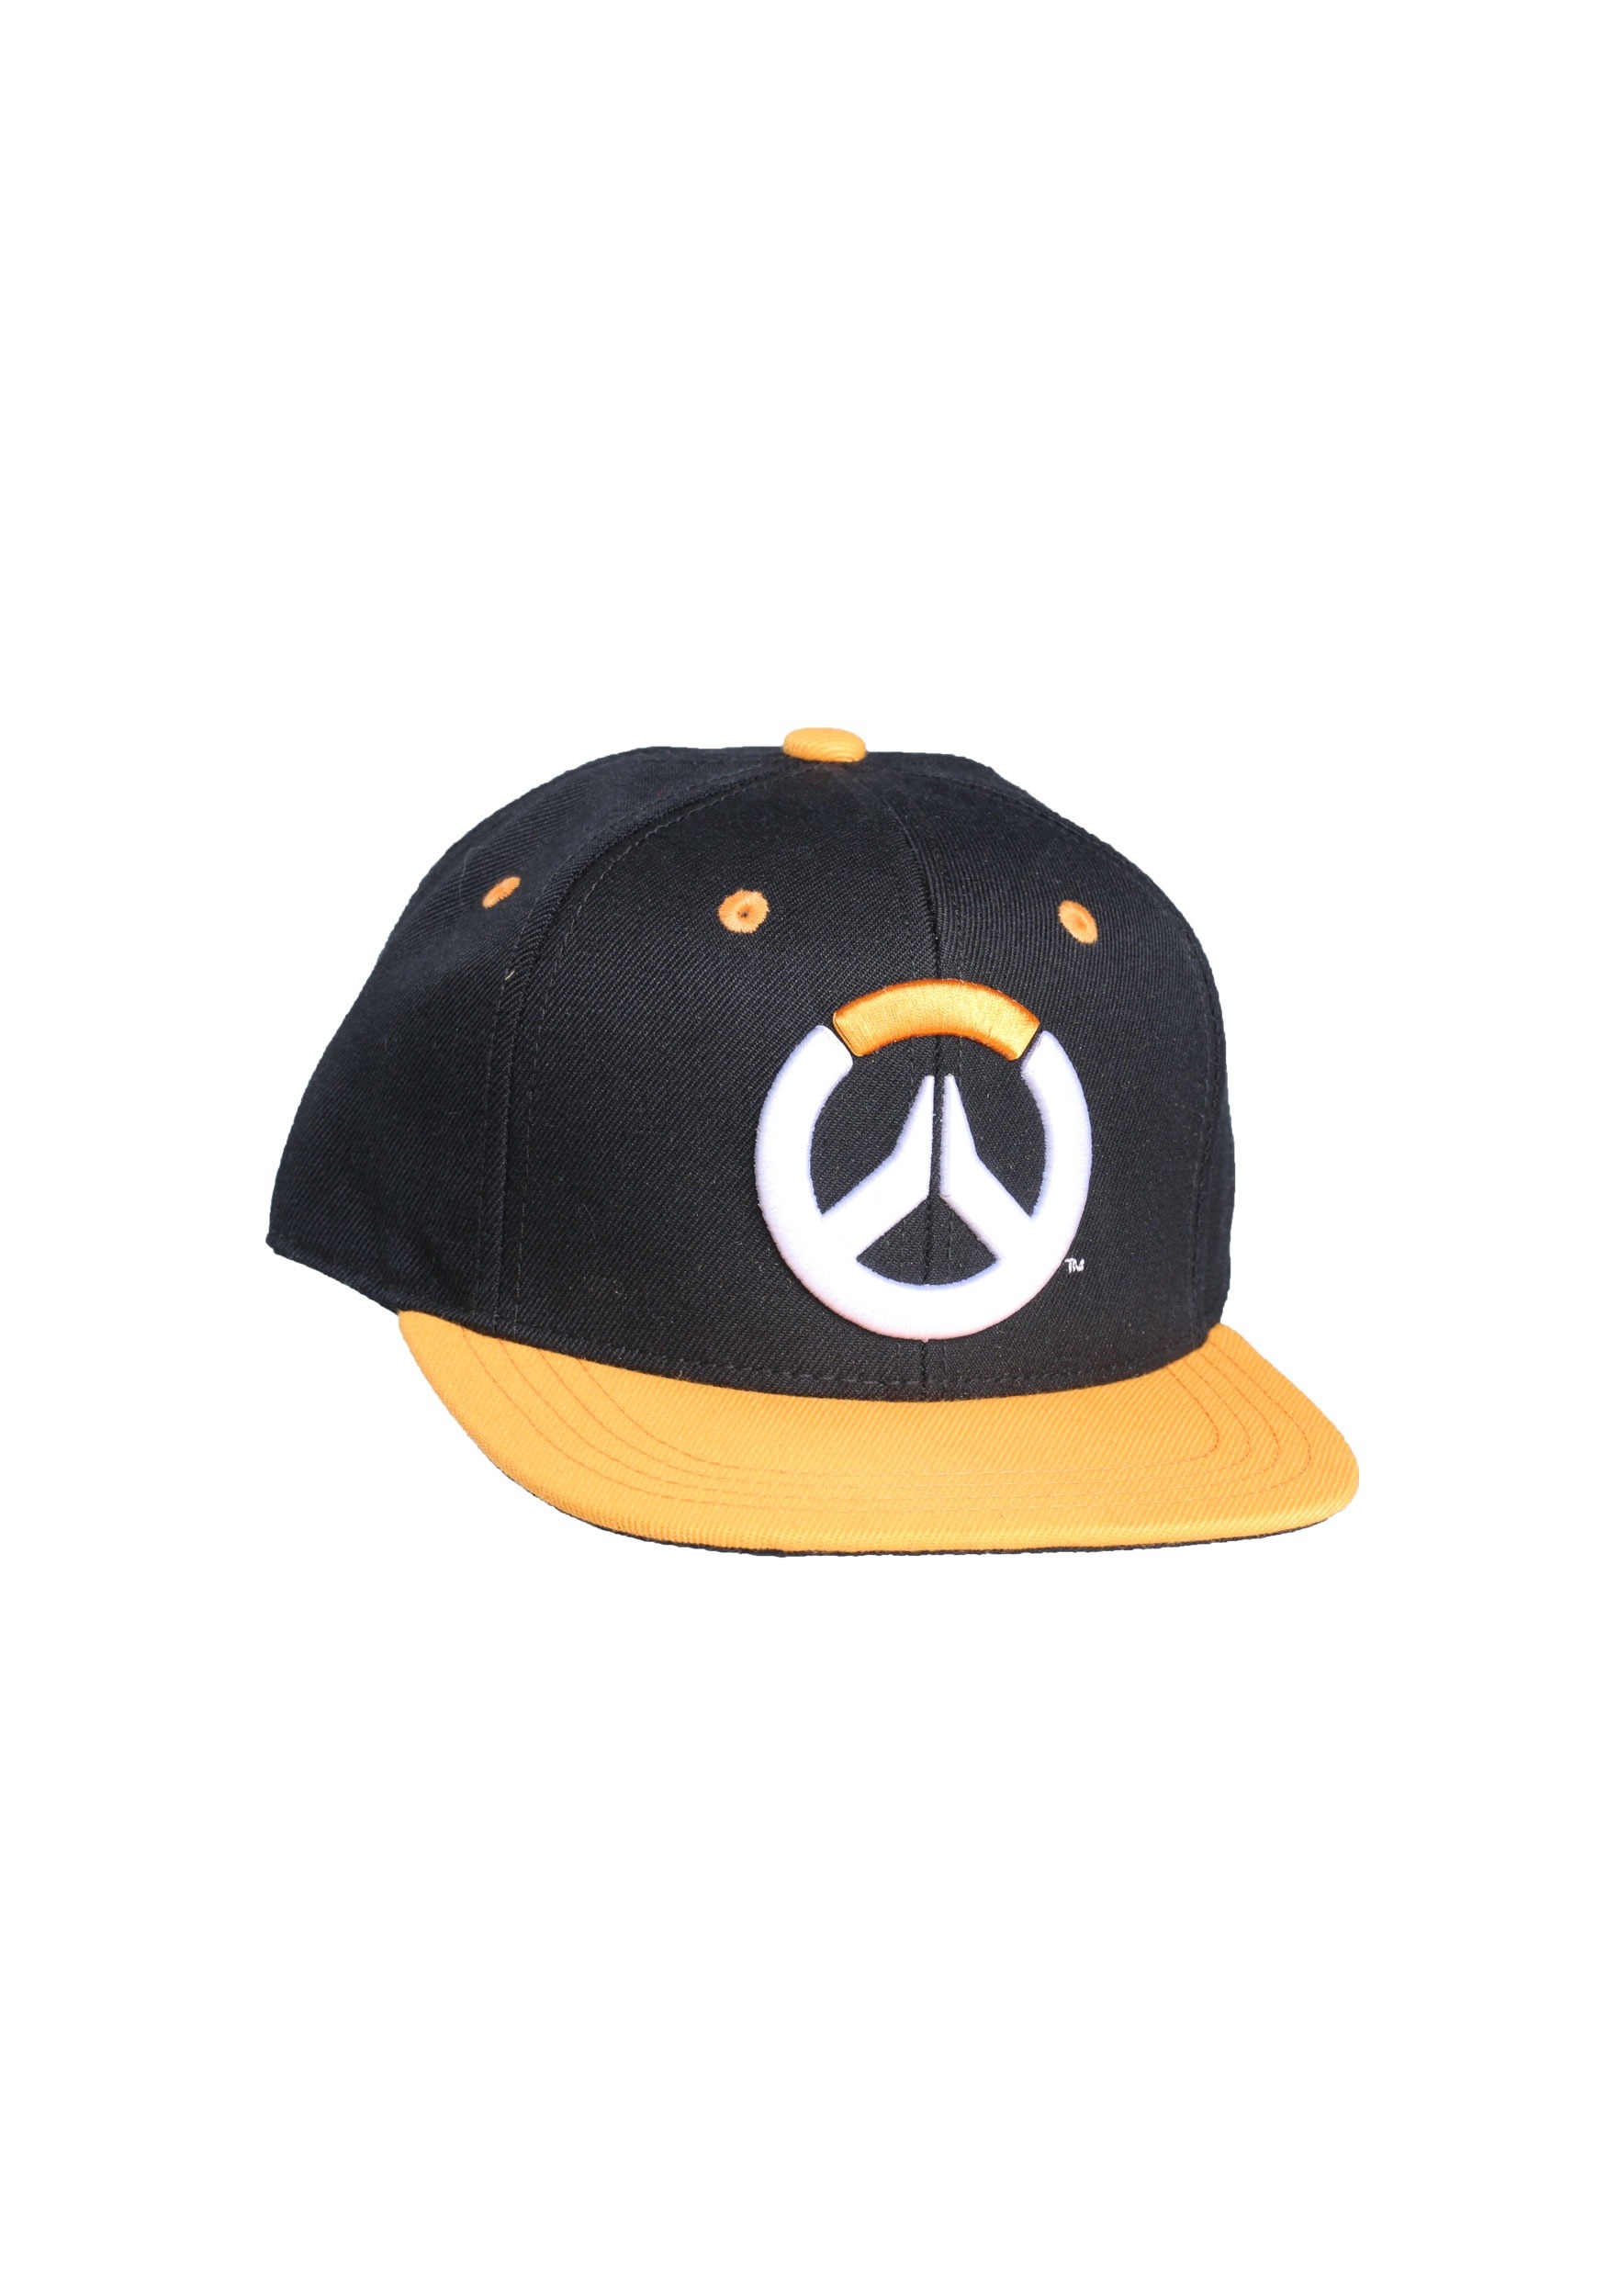 Snapback Overwatch Logo Hat